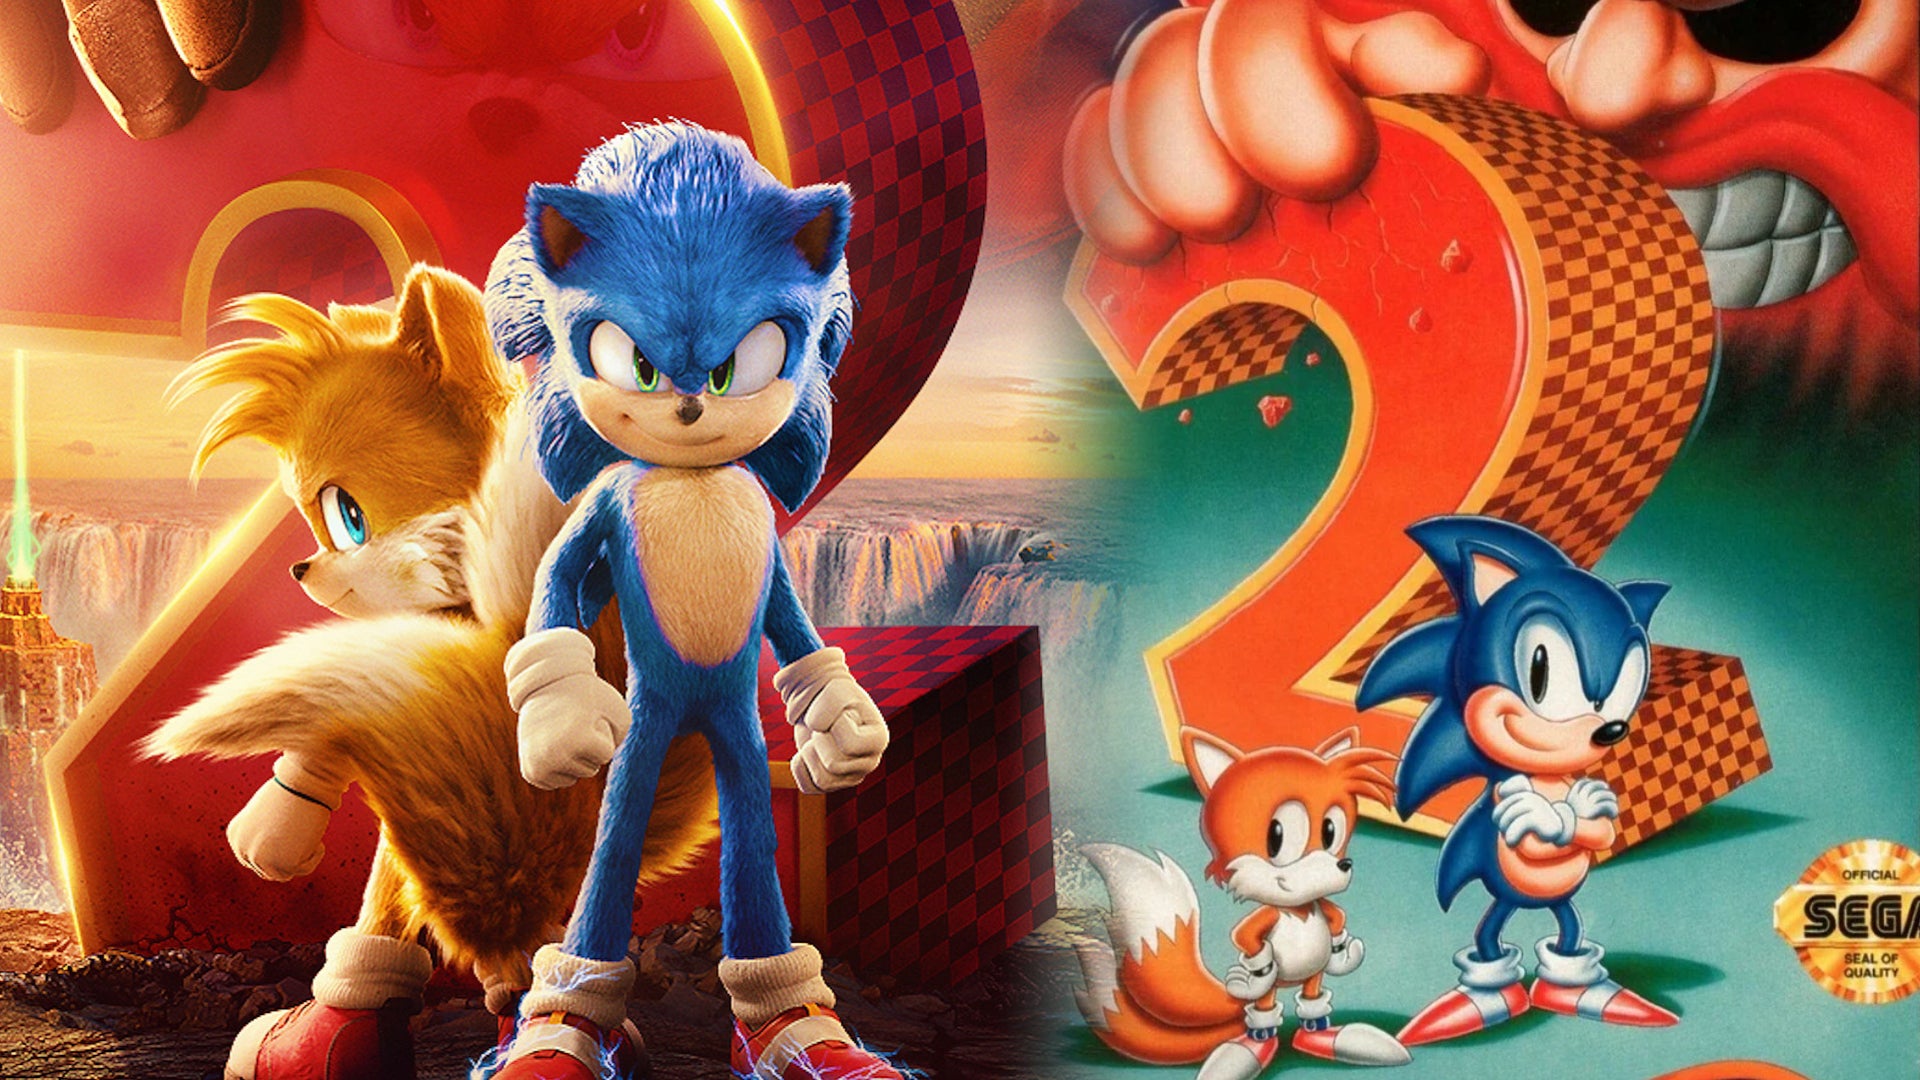 Image for Amazing Sonic the Hedgehog 2 movie poster goes hard on Mega Drive nostalgia